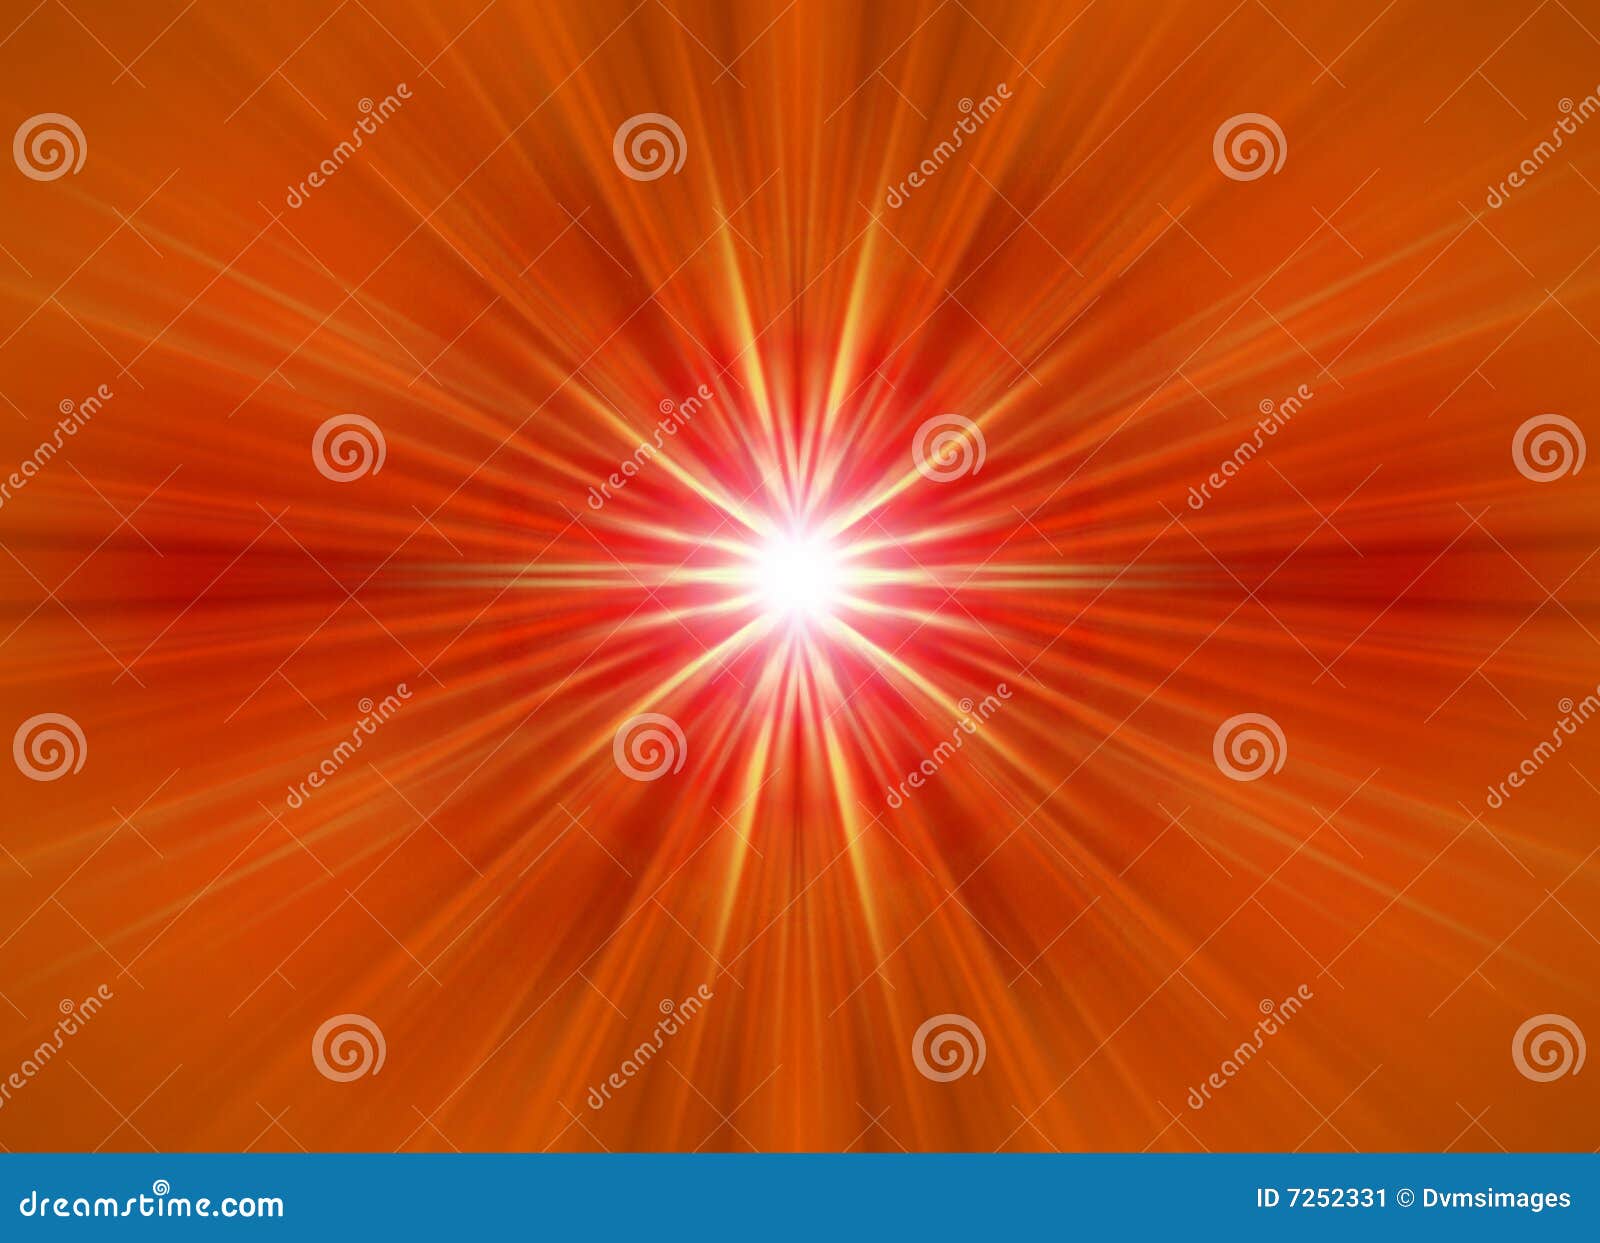 symmetrical orange rays